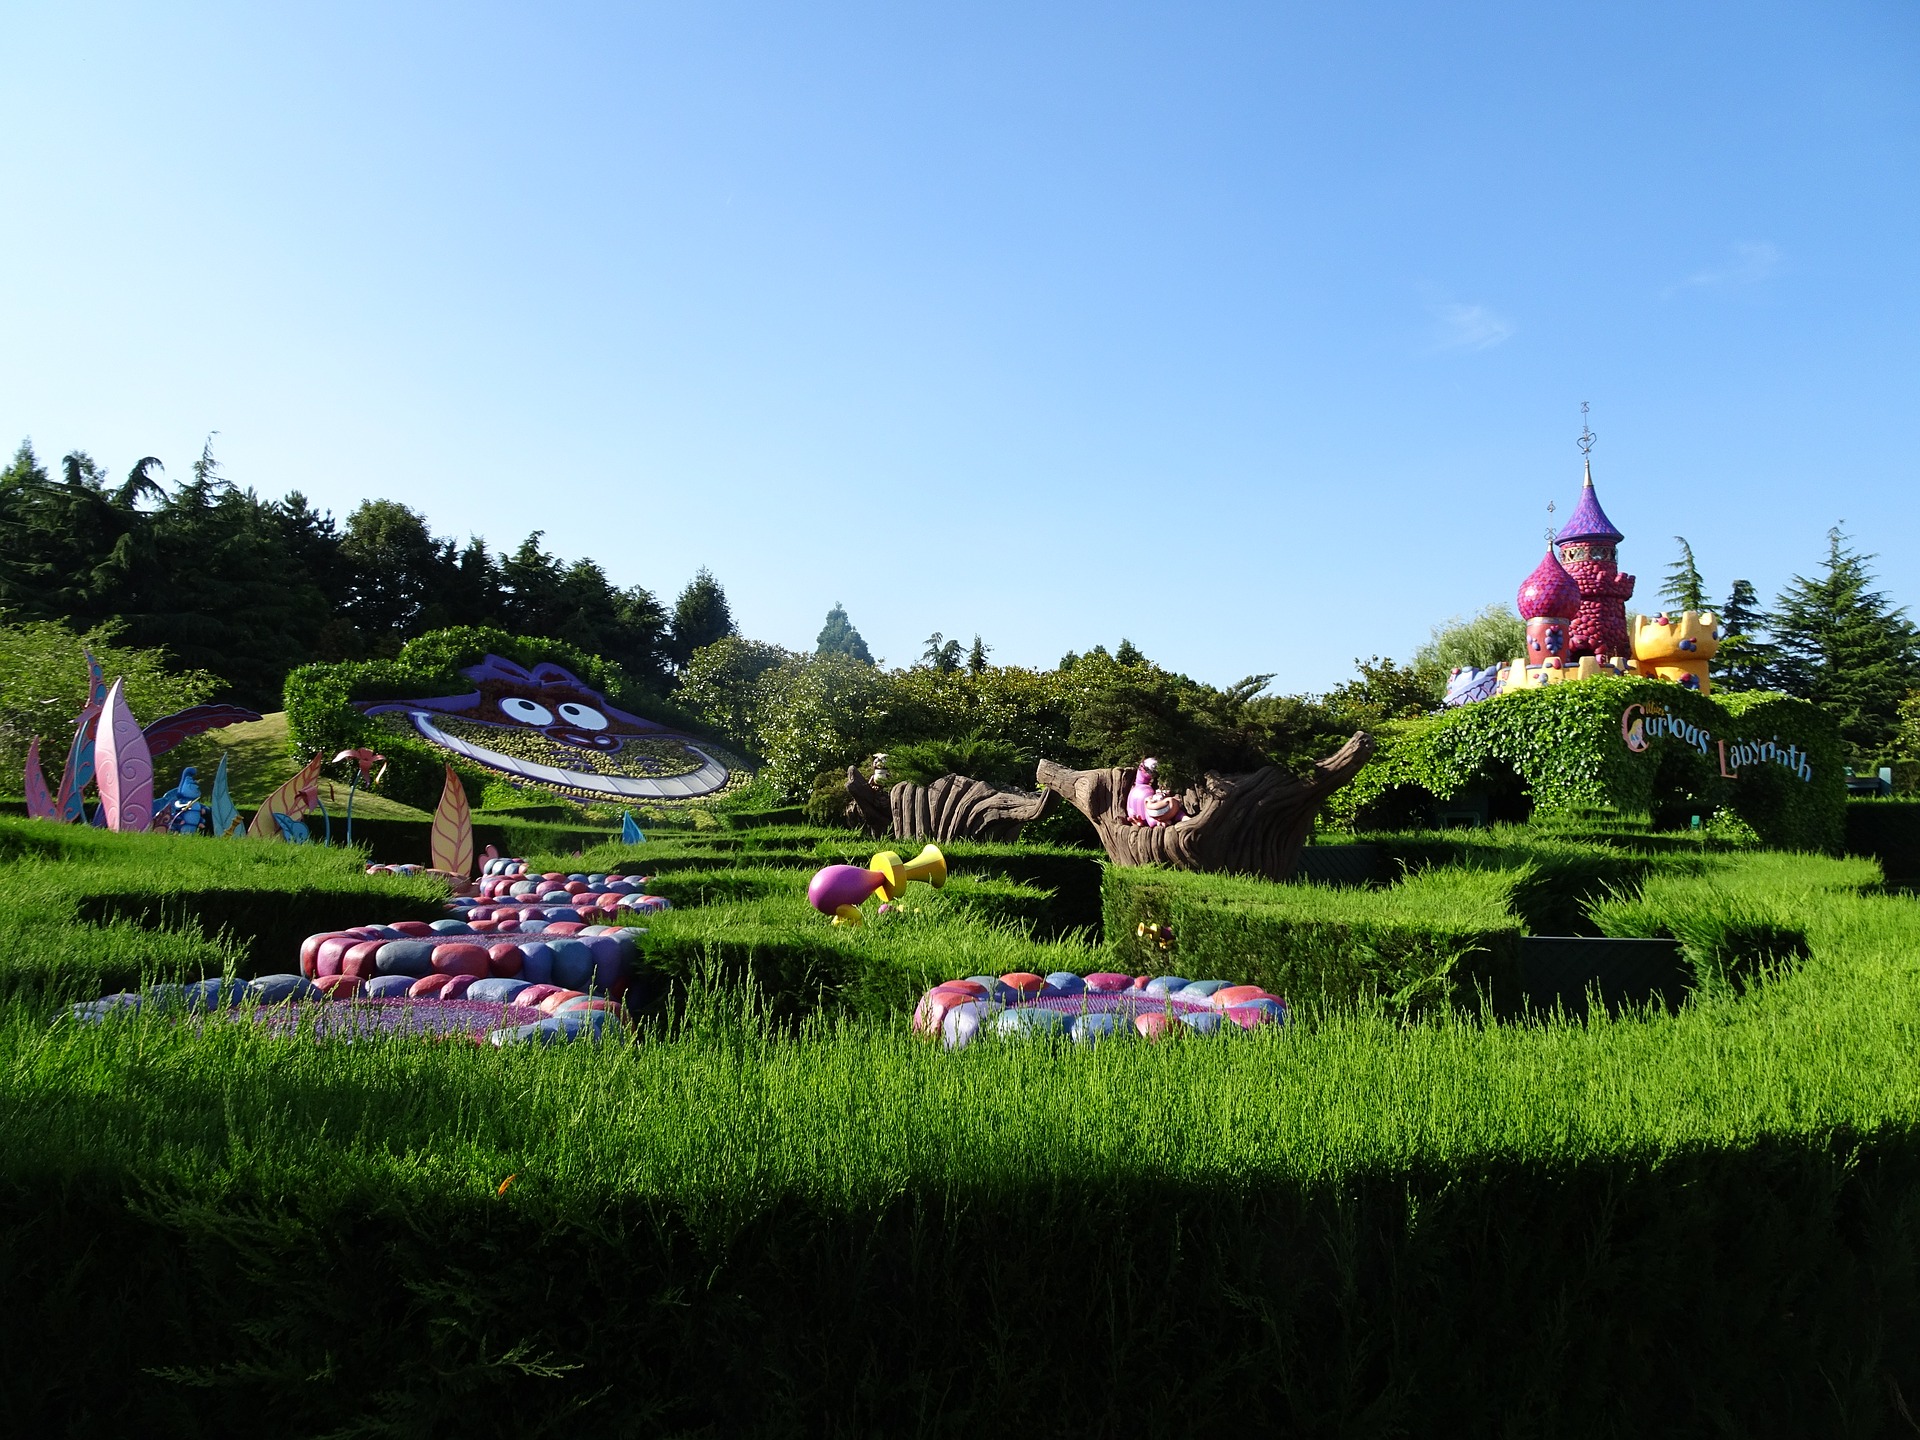 Disneyland Fantasyland